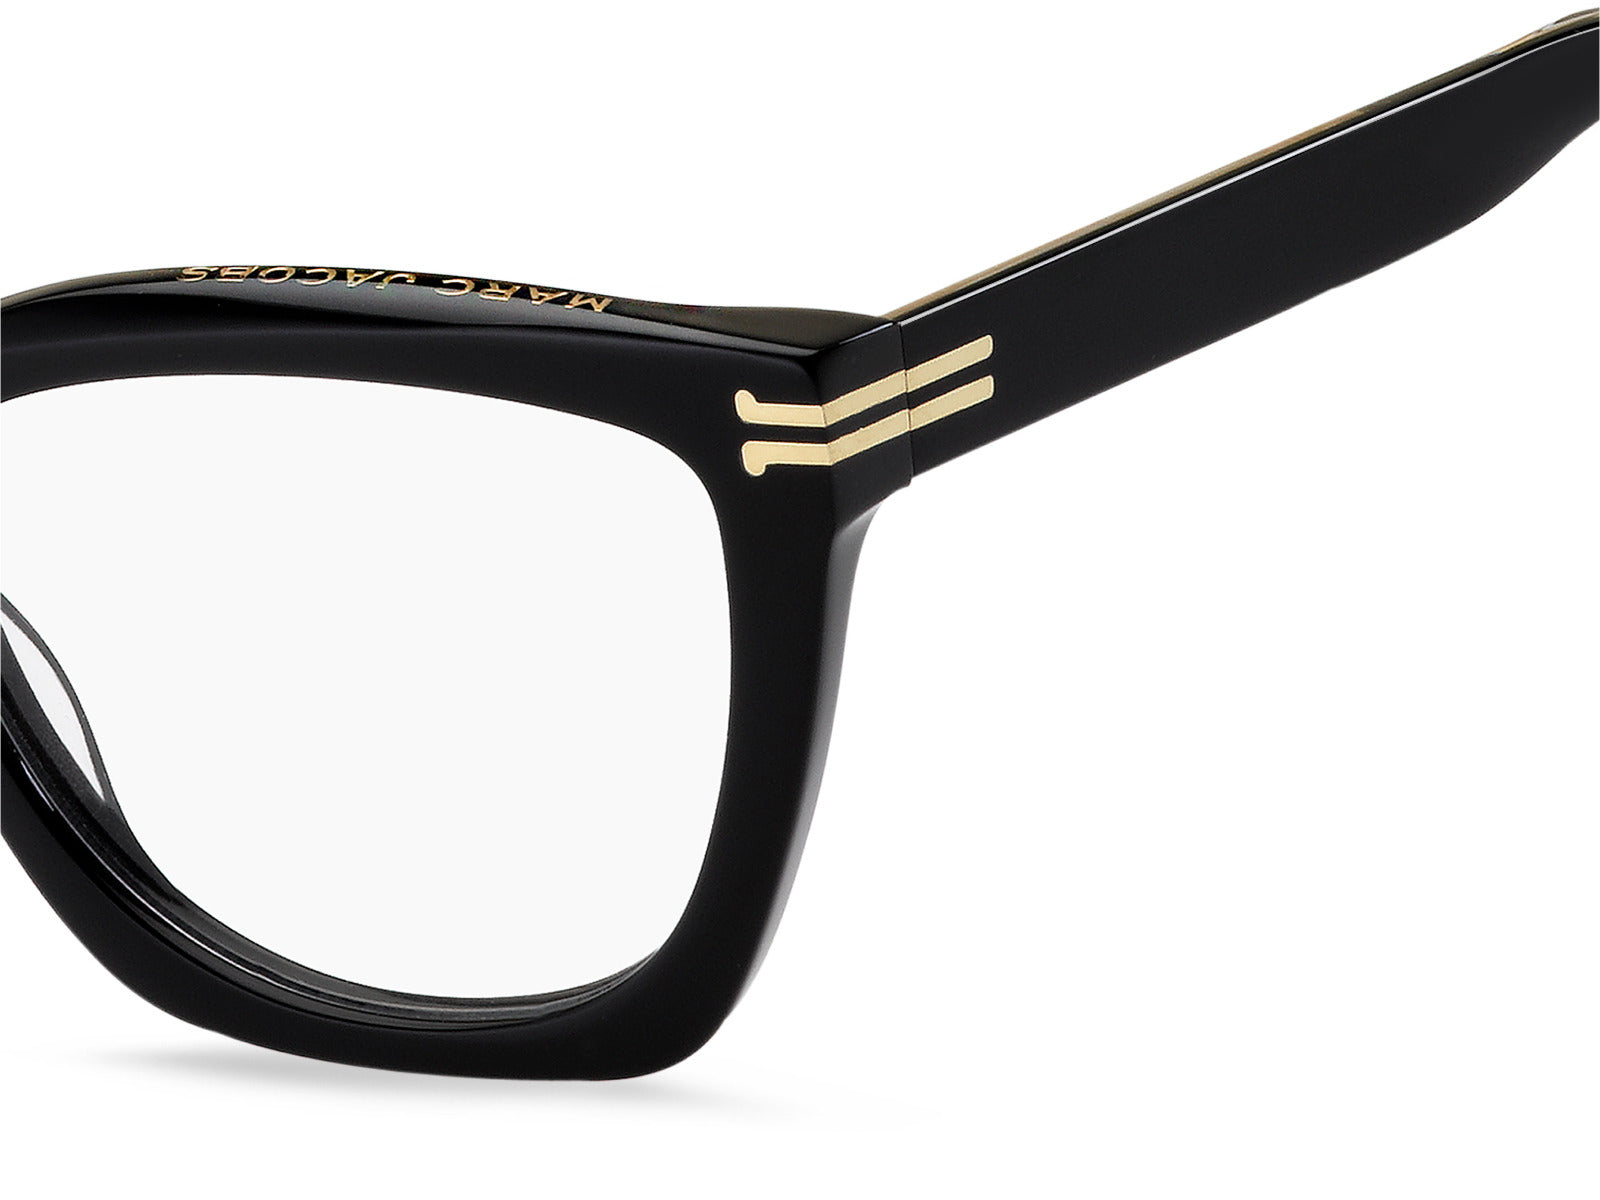 Marc Jacobs Eyewear square-frame Optical Glasses - Black